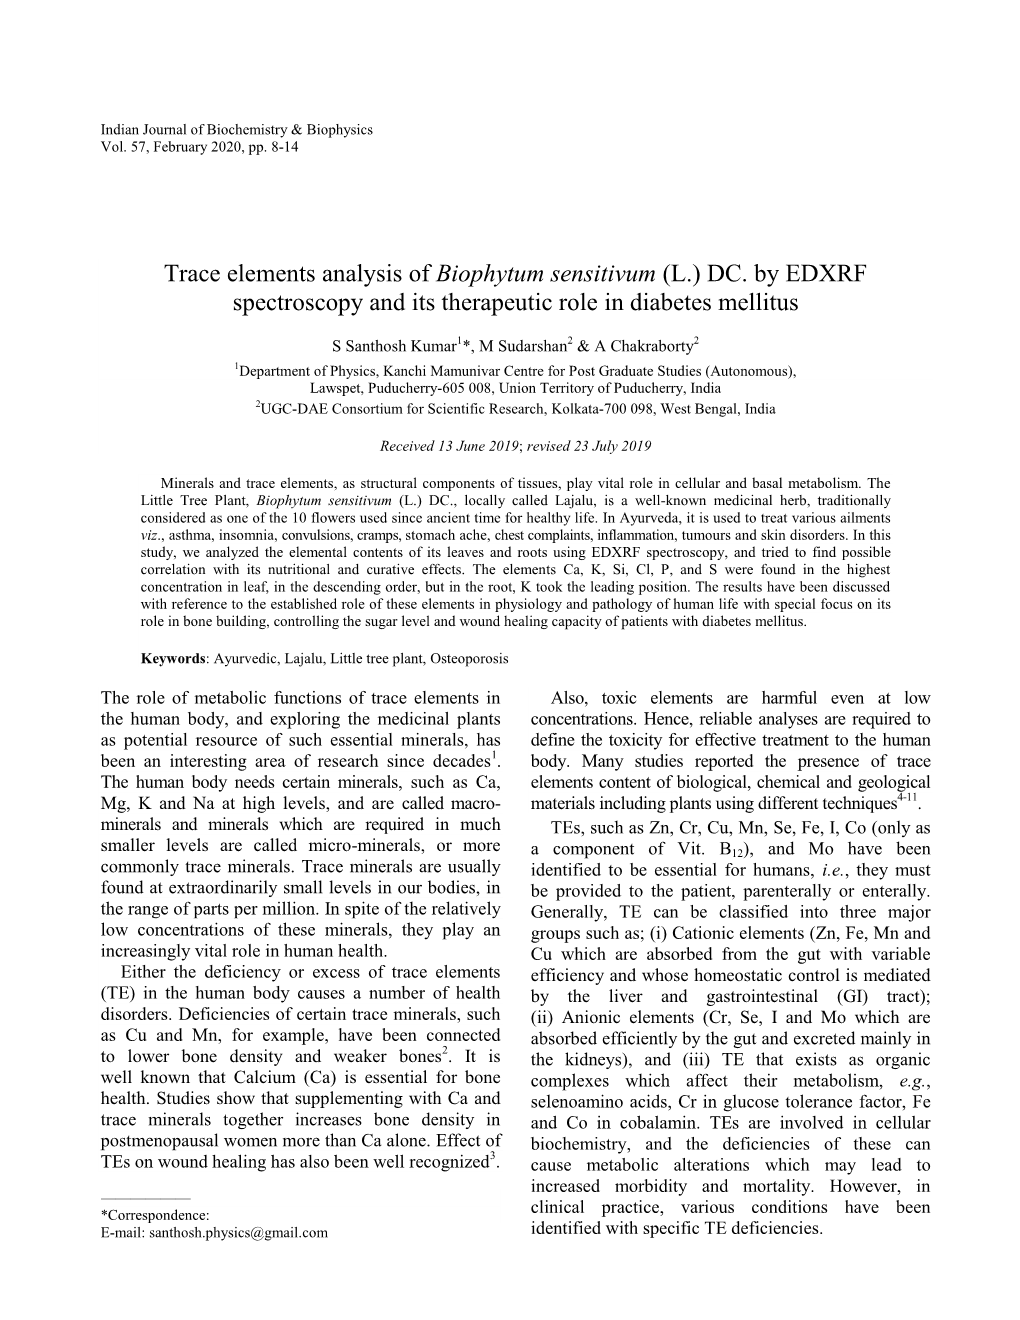 Trace Elements Analysis of Biophytum Sensitivum (L.) DC